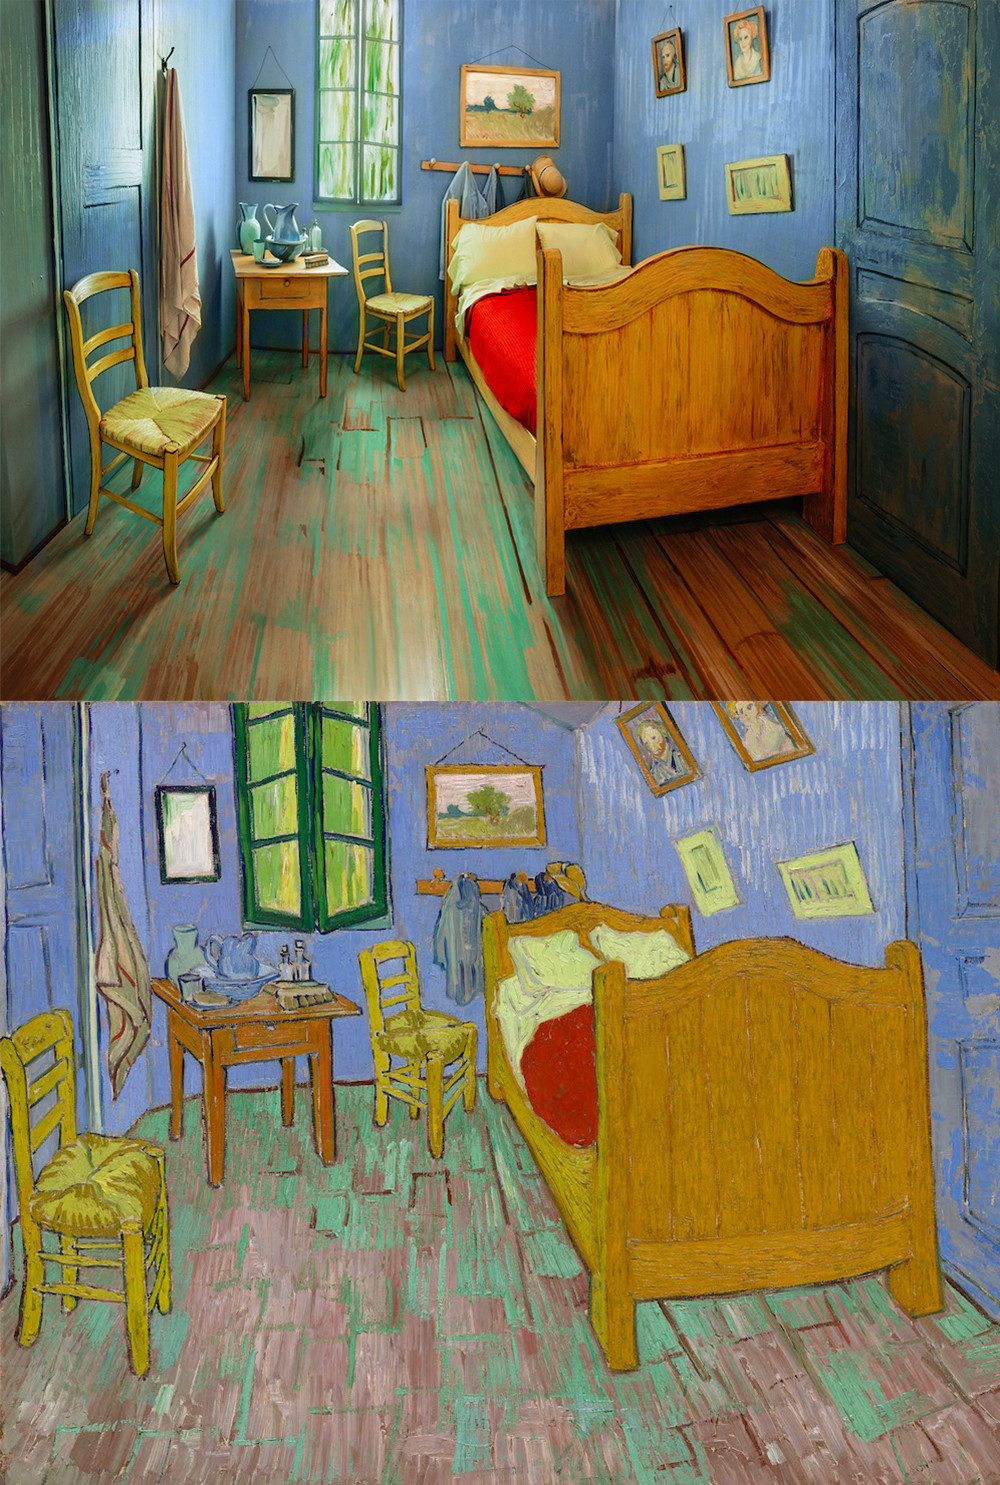 Van Gogh Bedroom Painting
 The Art Institute of Chicago Recreates Van Gogh’s Famous